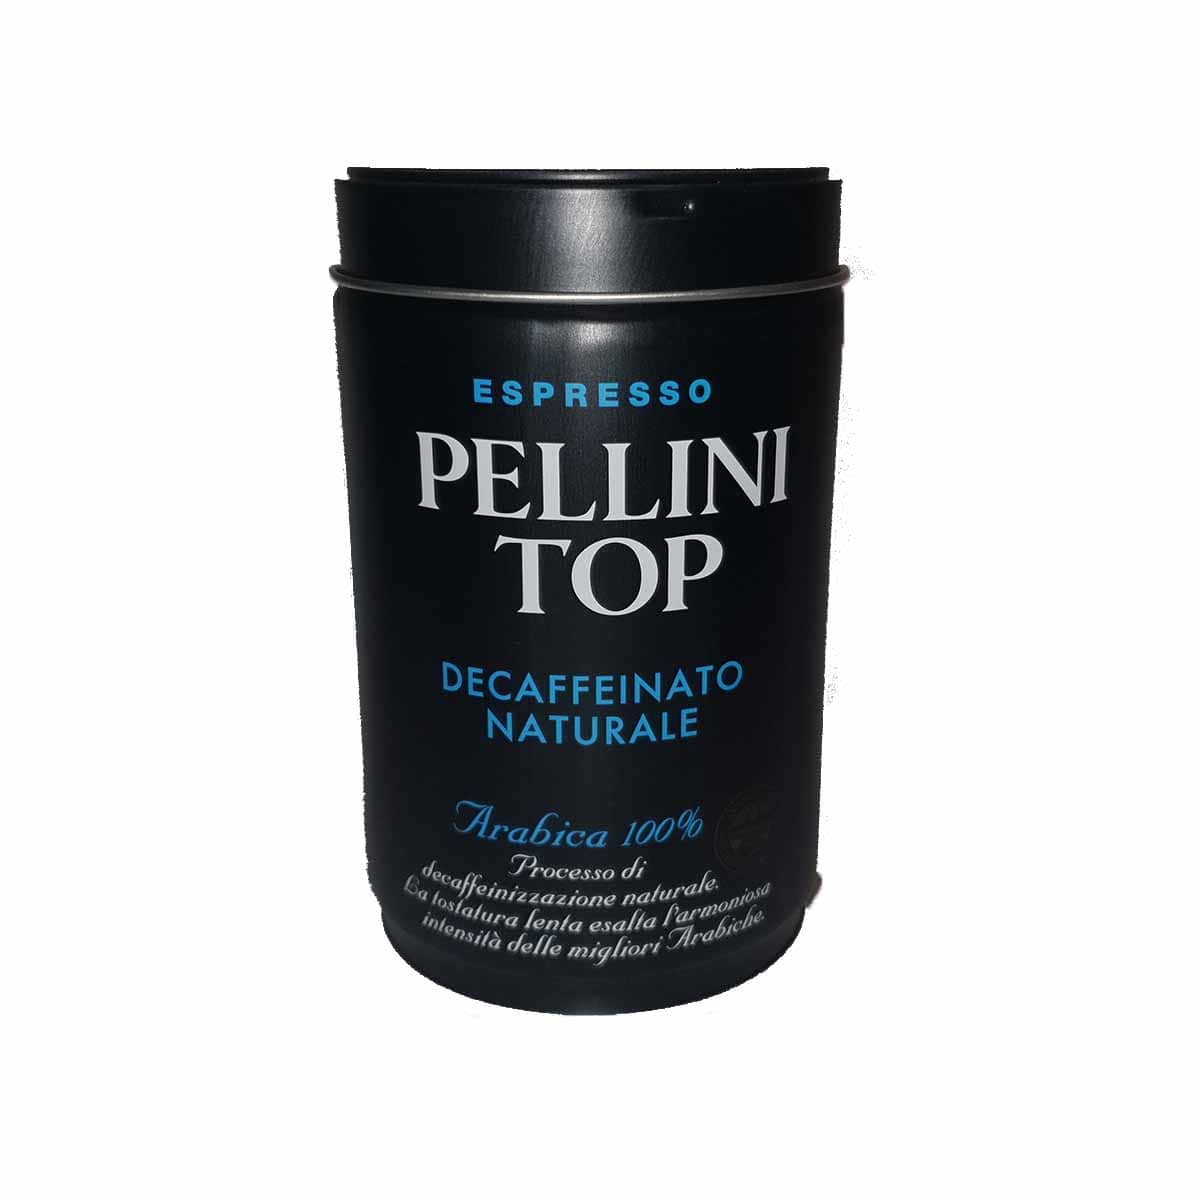 Pellini Top Decaffeinato Ground Coffee 250g (8.8oz) - Aster Premium